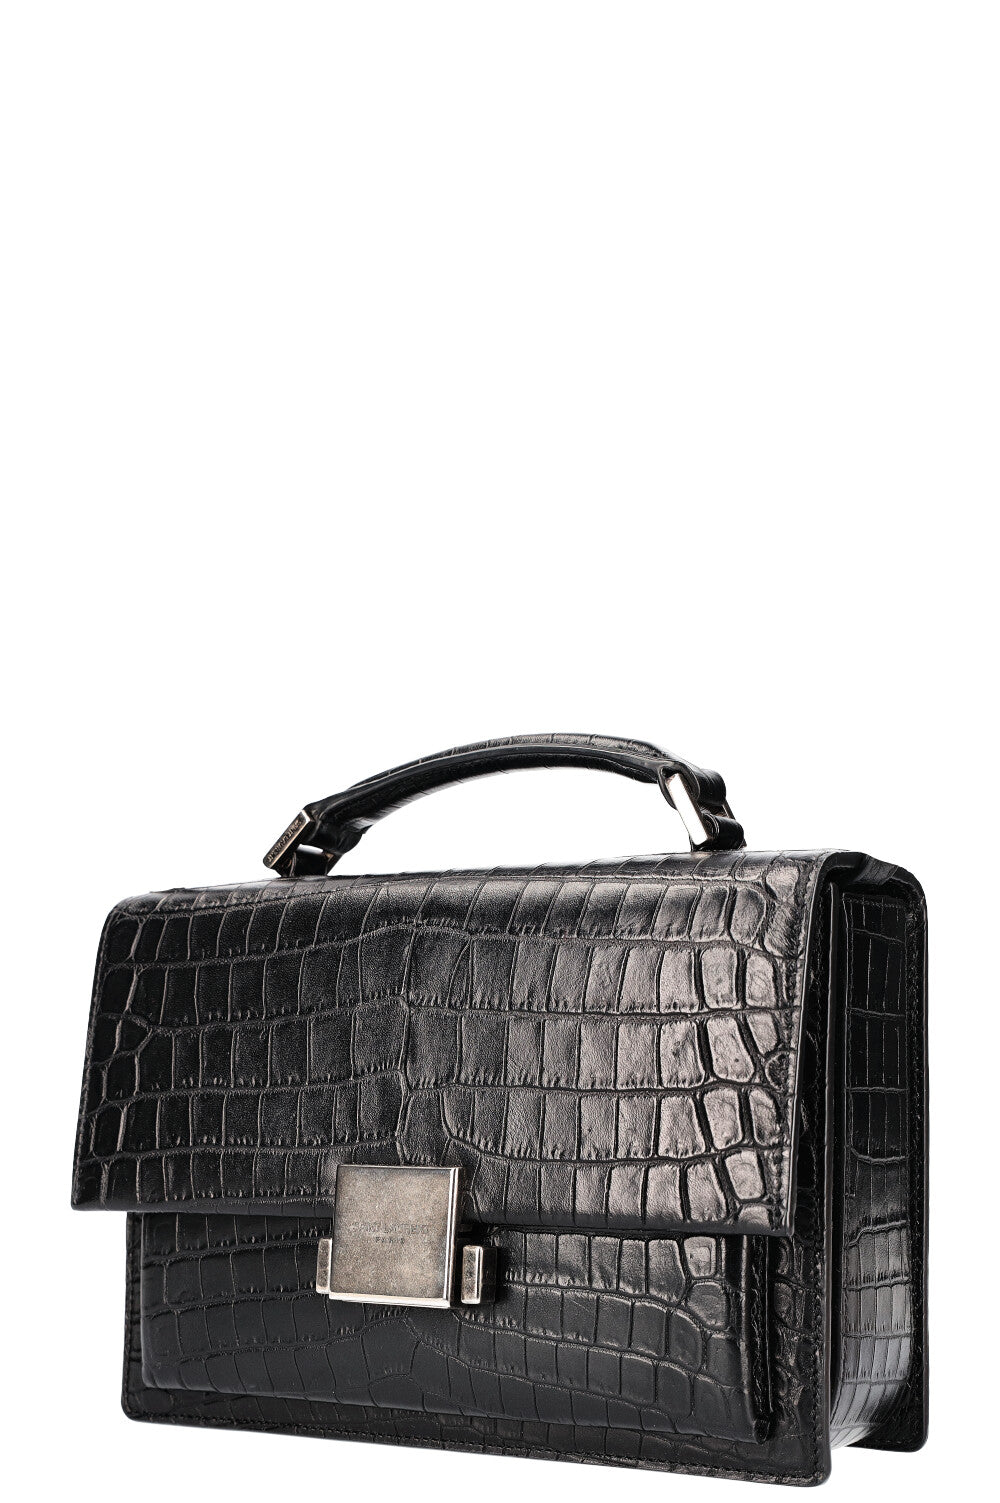 SAINT LAURENT Bellechasse Bag Medium Croc Embossed Black